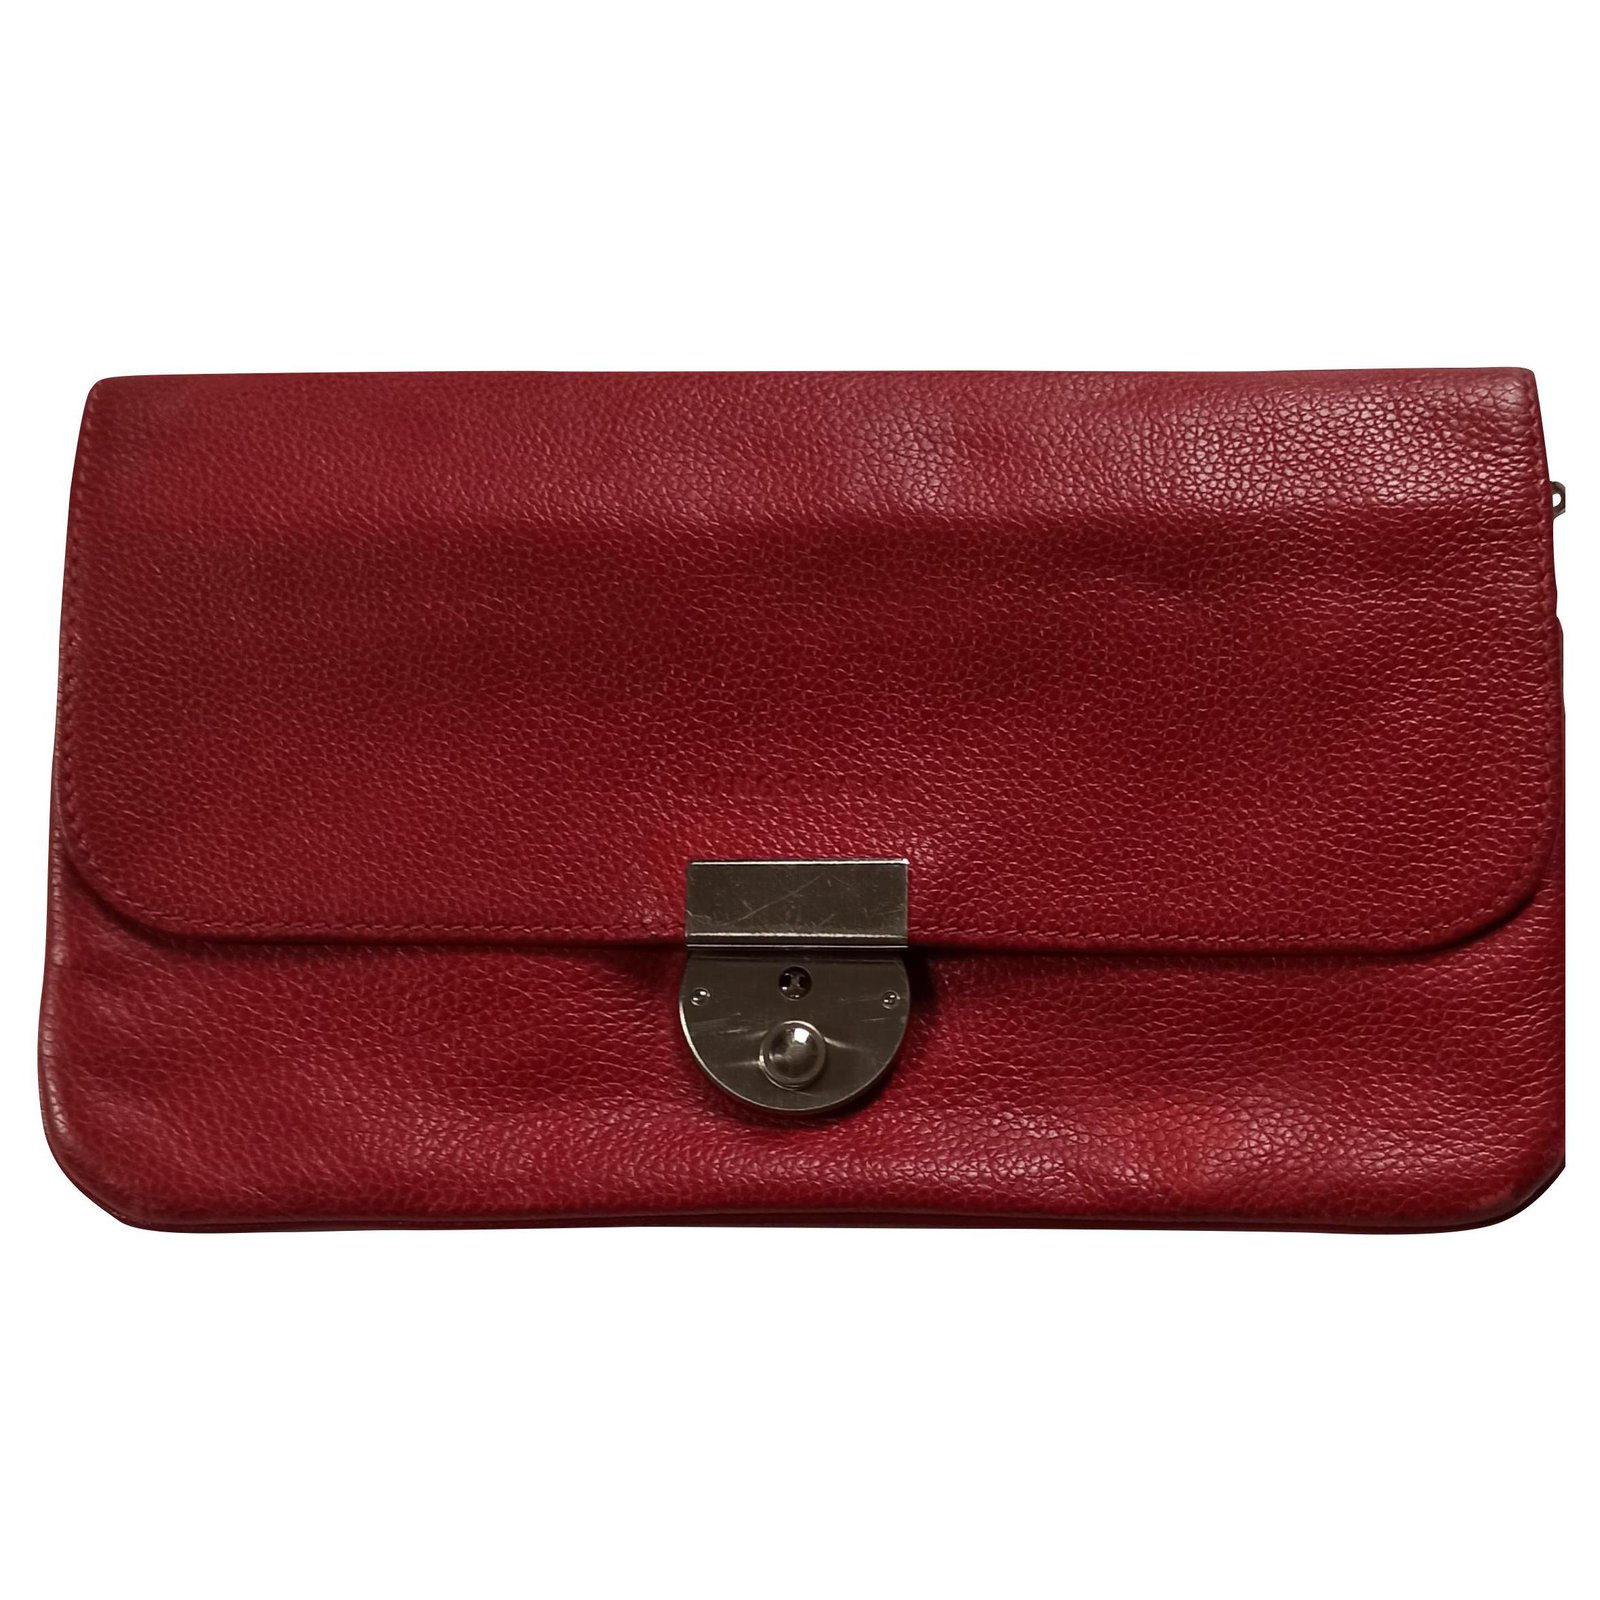 Longchamp | Bags | Longchamp Red Leather Lock Flap Clutch 9lc13 | Poshmark